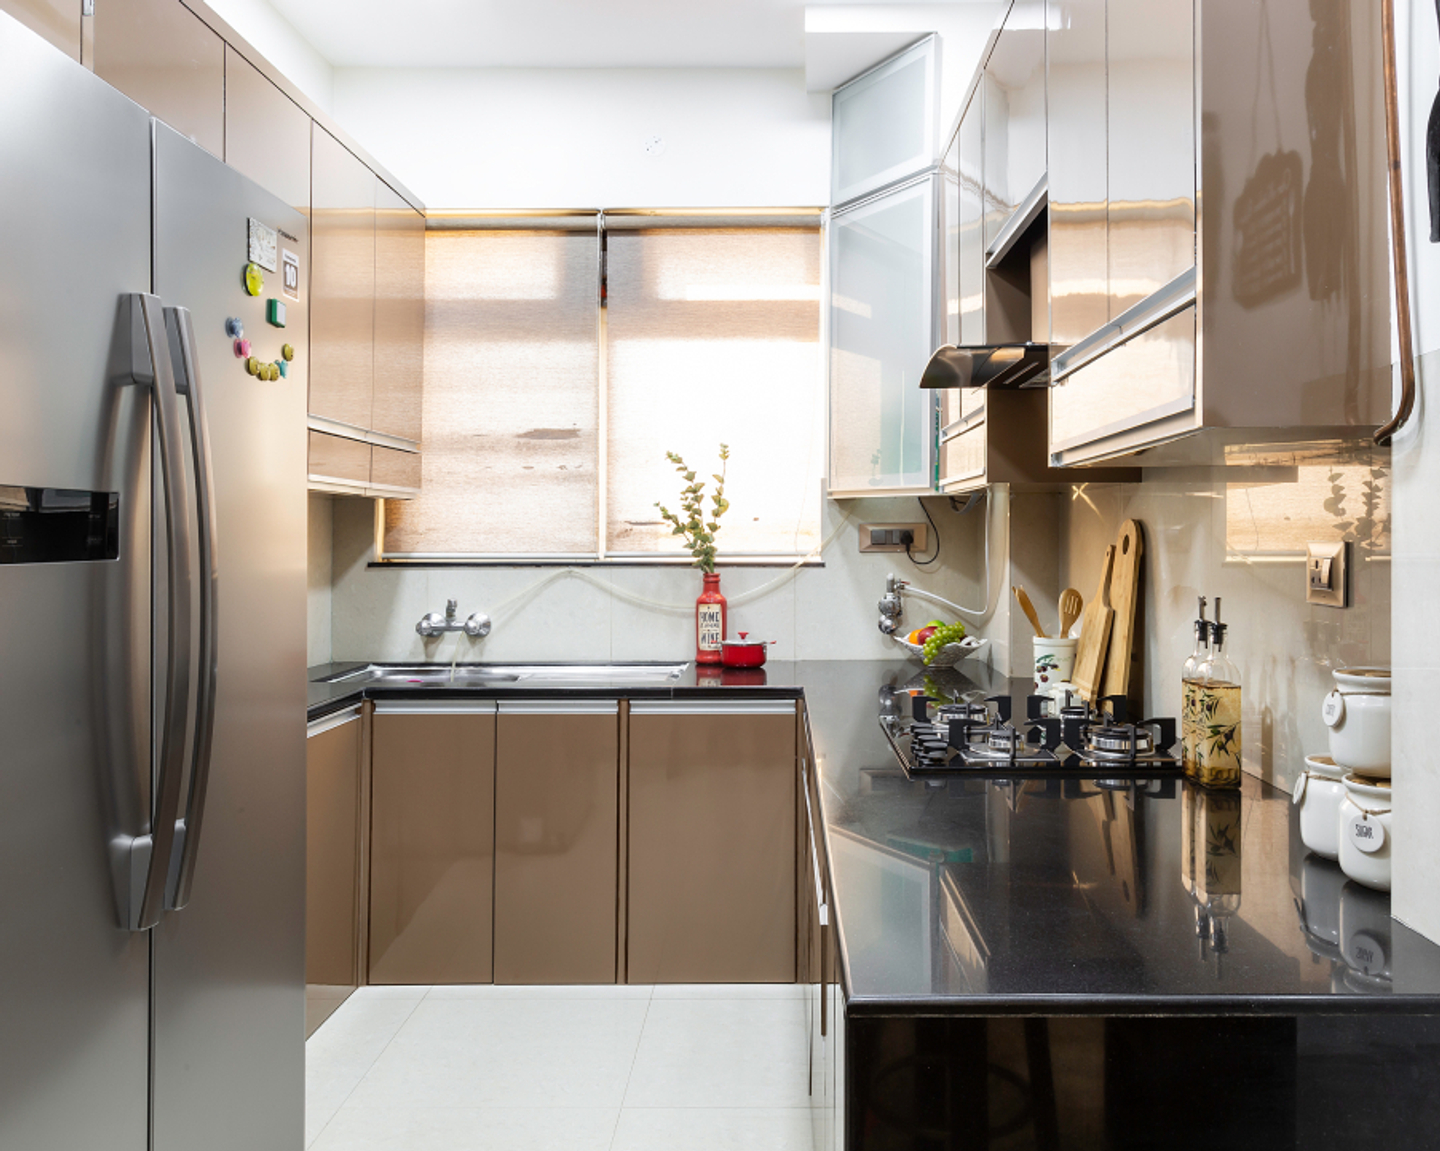 Modern Modular U-Shaped Kitchen Design With Spacious Cabinets